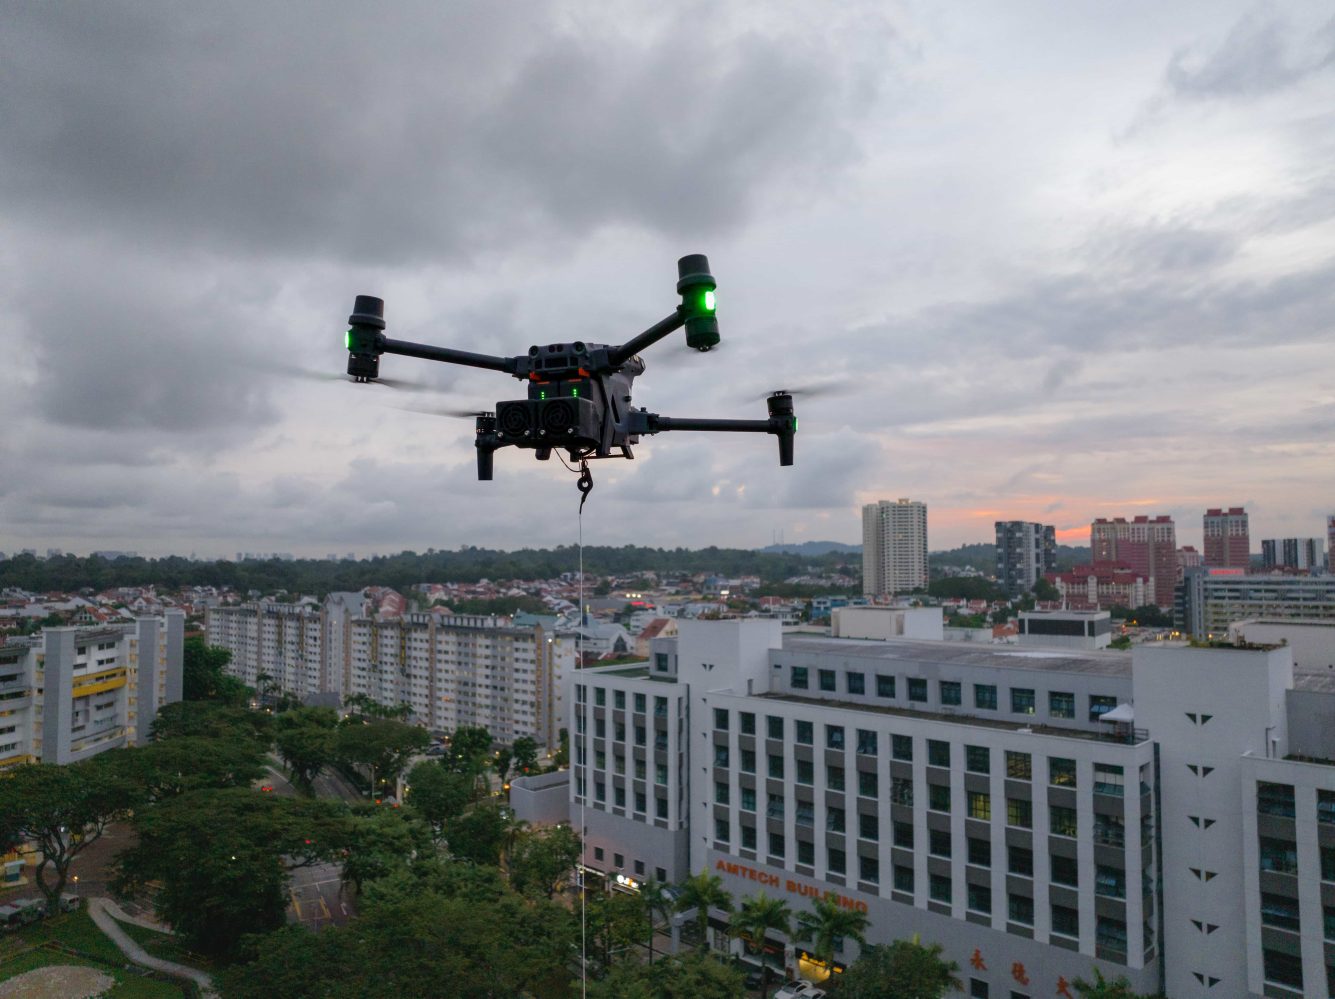 Report reveals vast impact if US blacklisting of DJI drones spreads